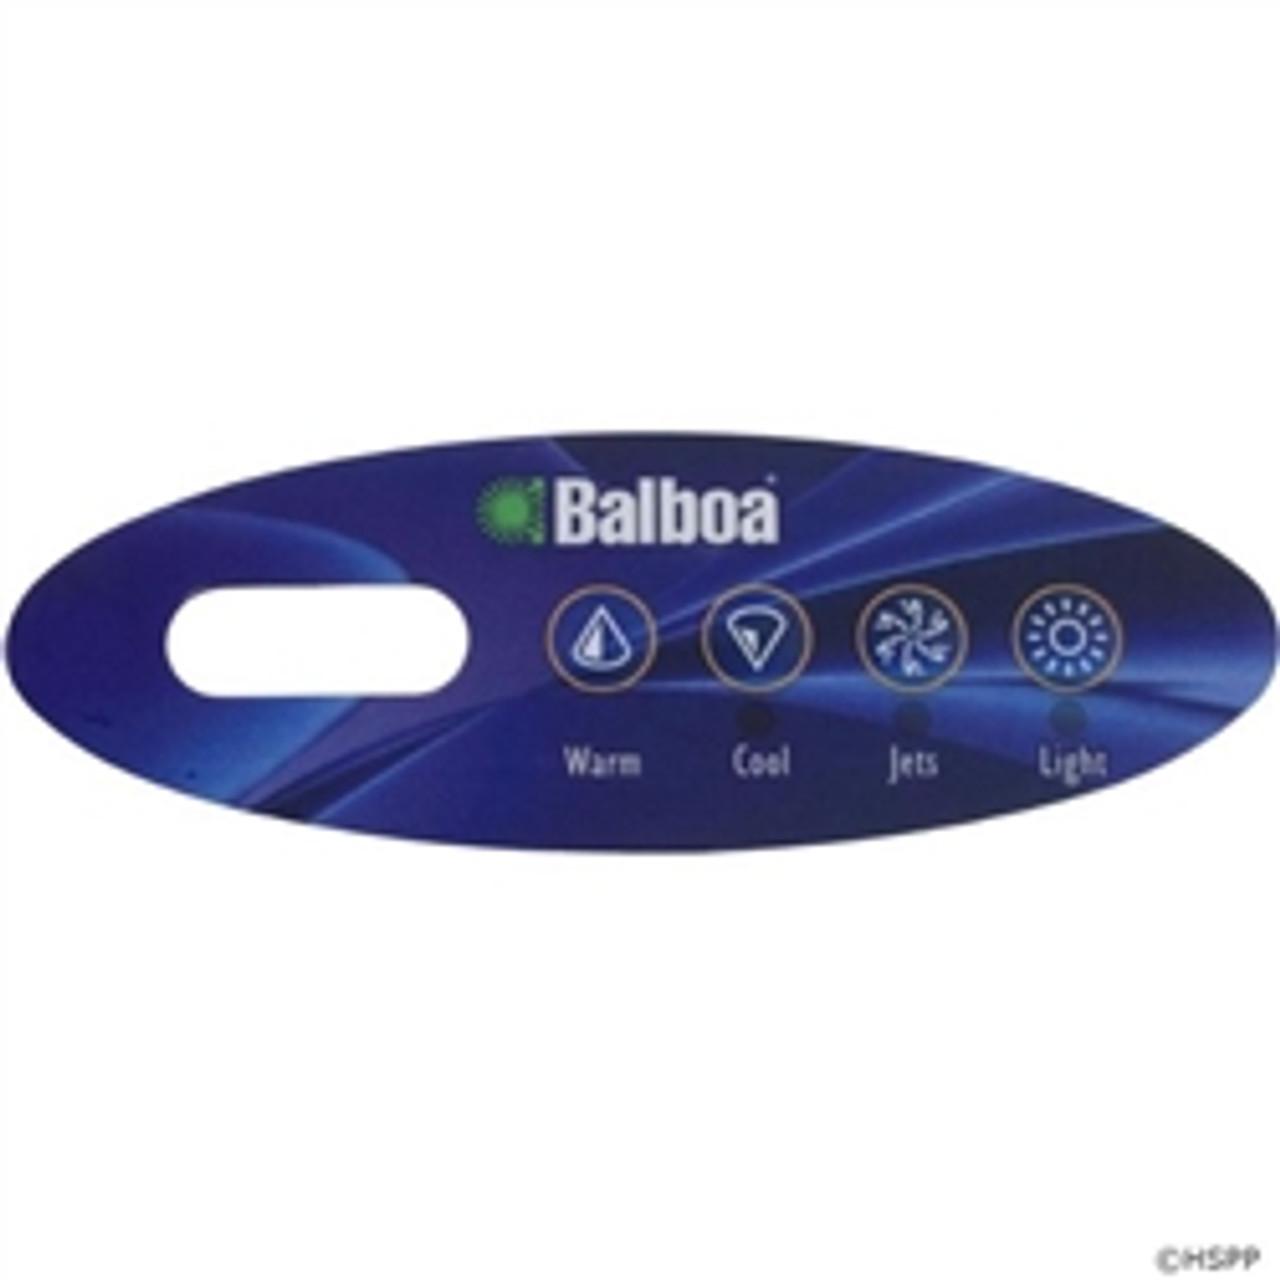 Balboa VL240 Overlay, 4 Button, Warm, Cool, Jet, Light, 13952